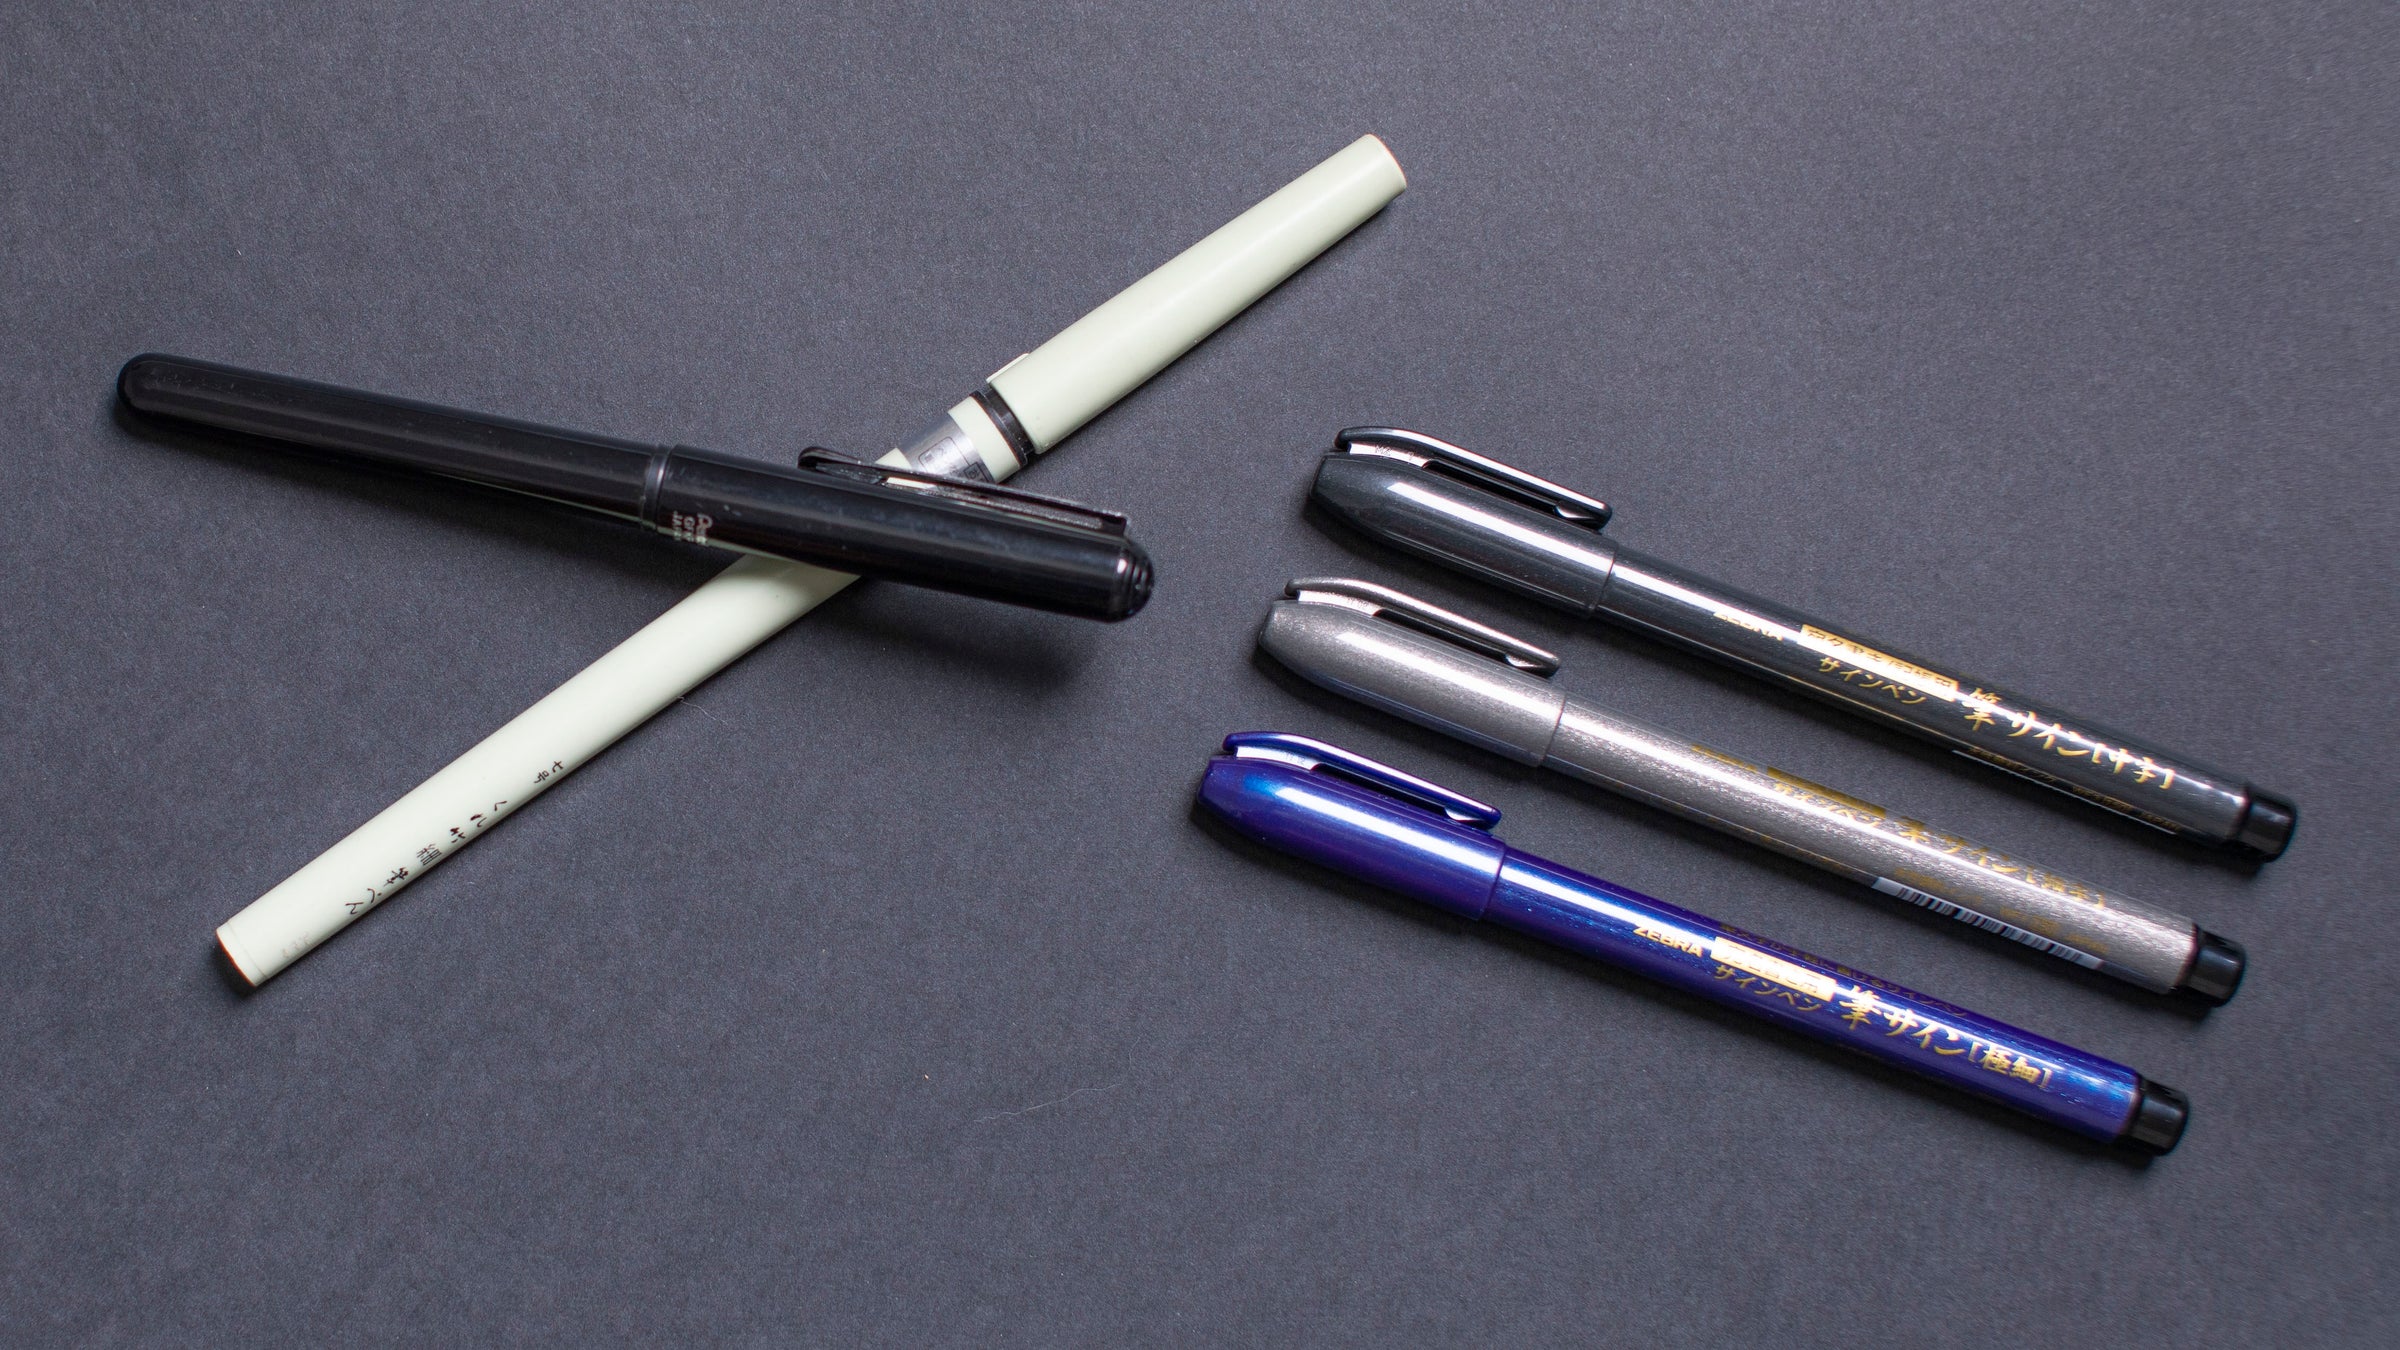 Brush Pens